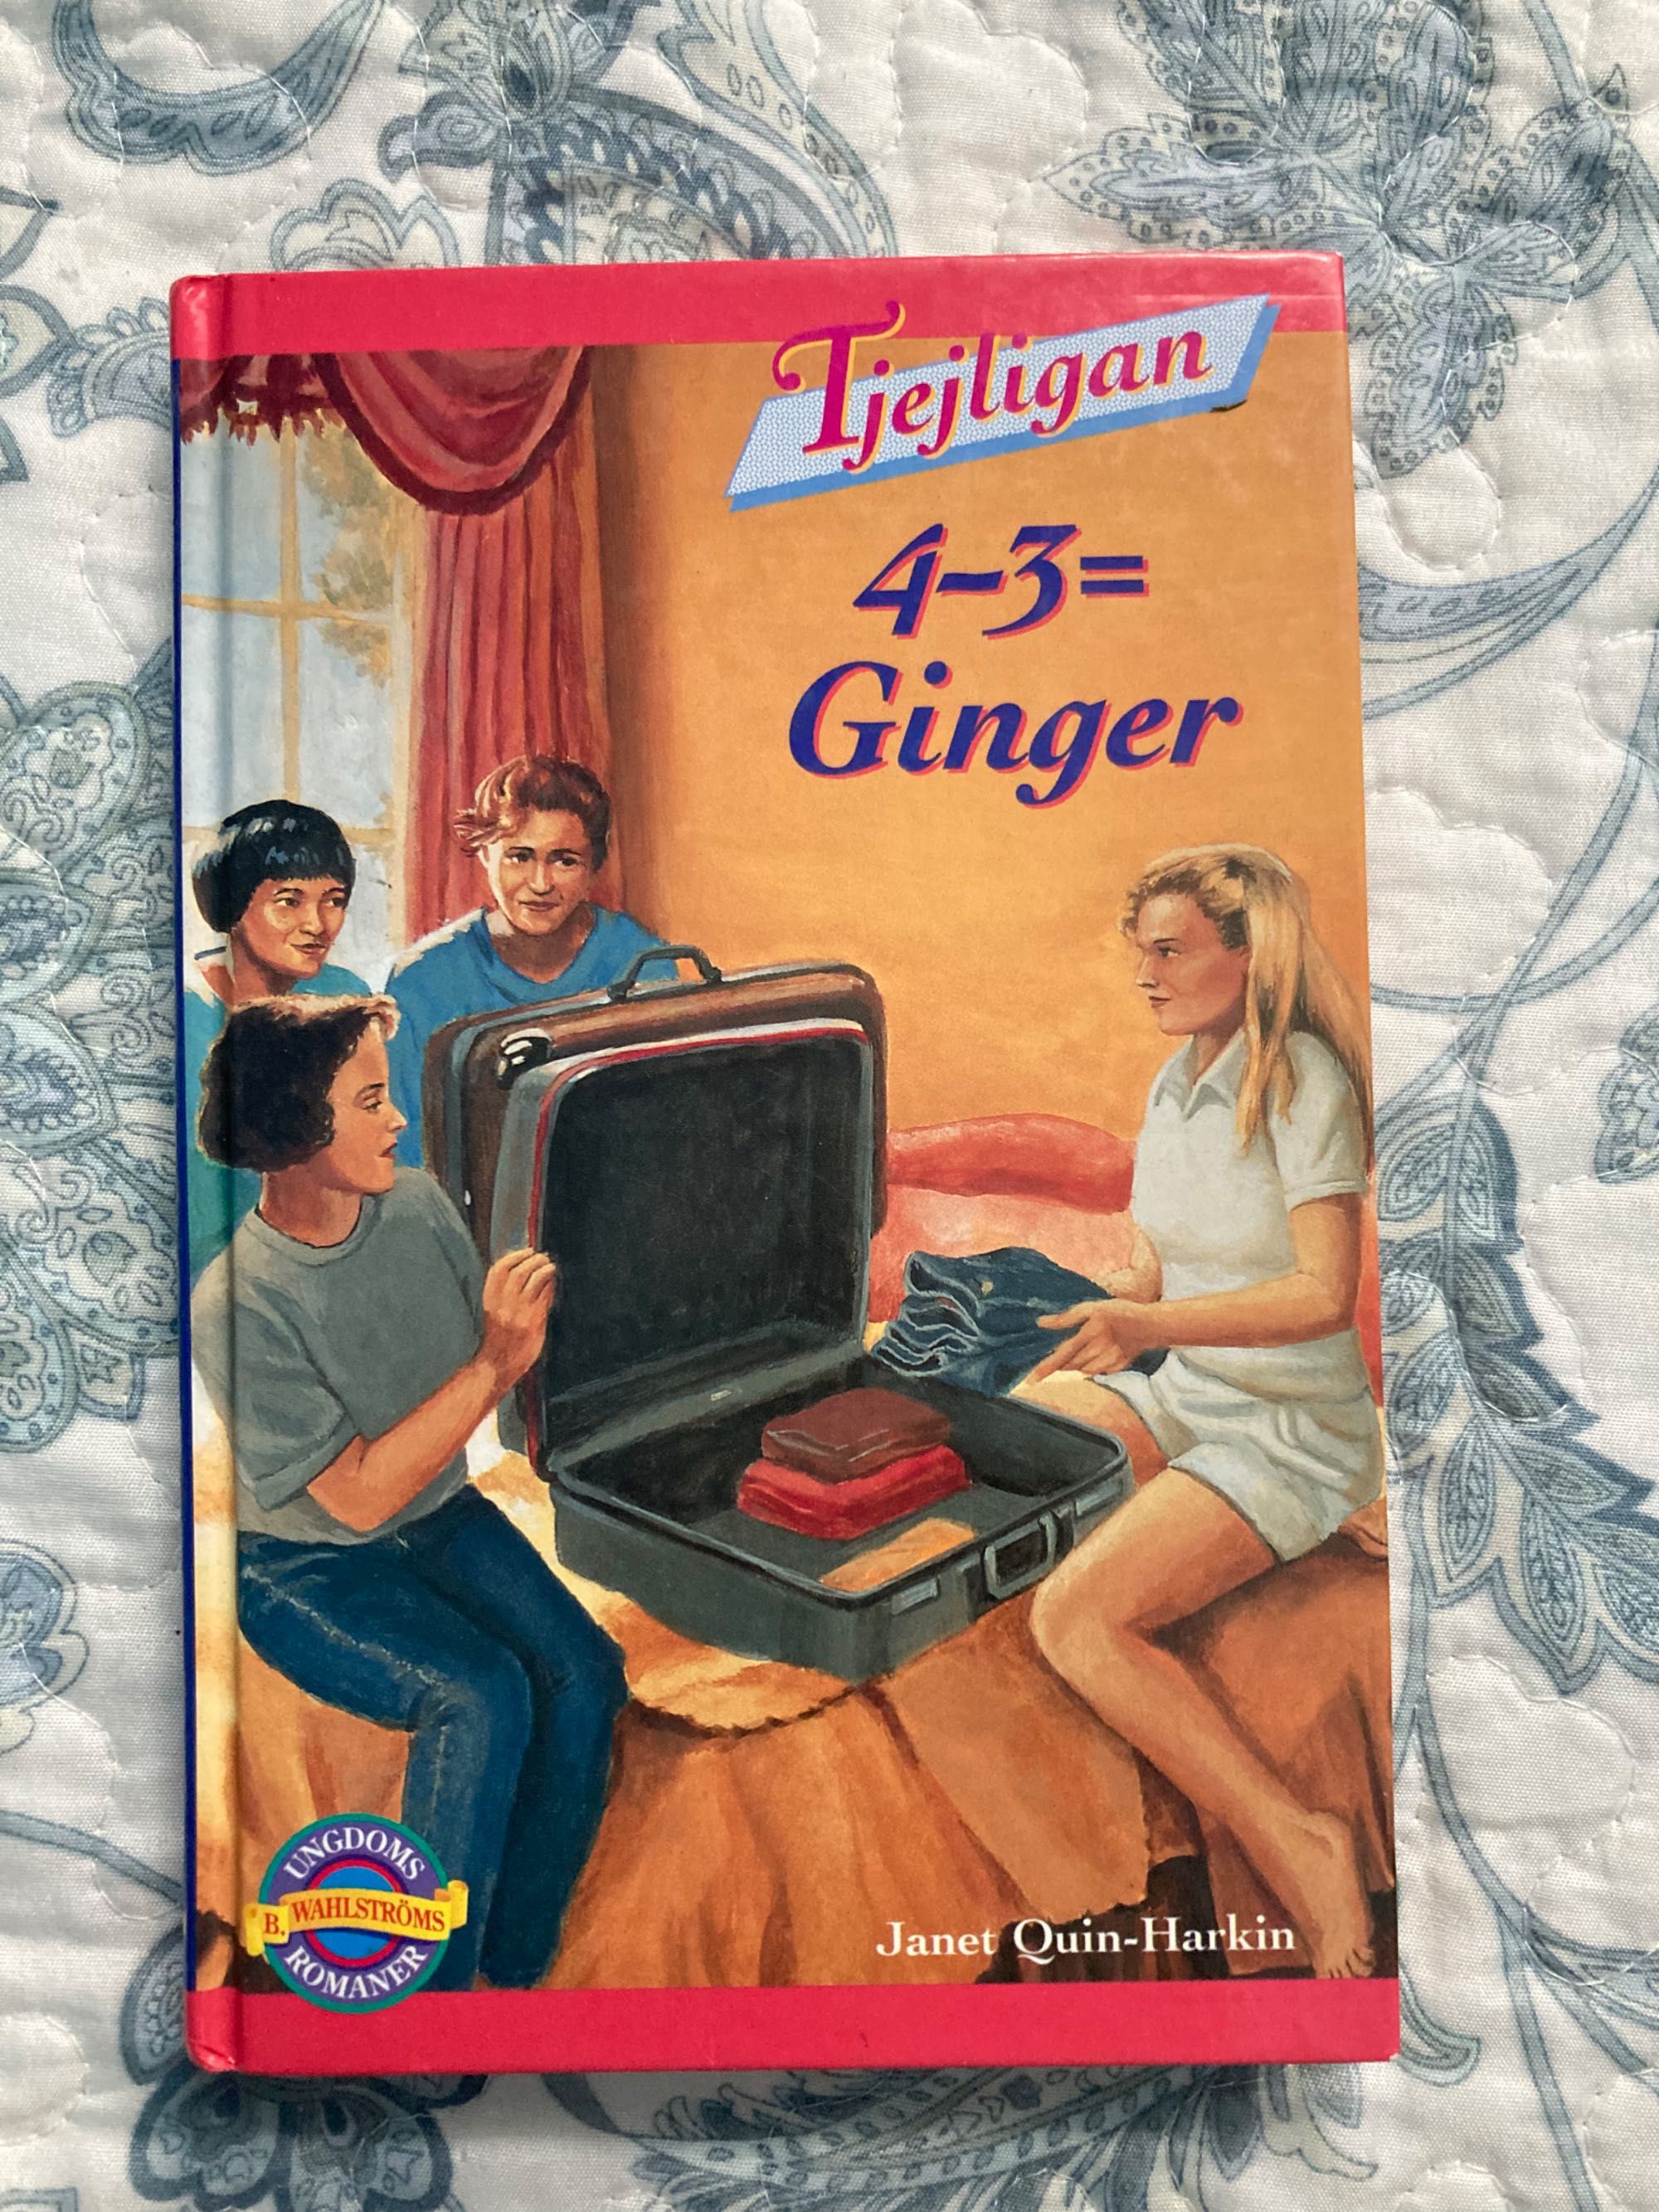 Ksiażka Po Szwedzku “4-3 = Ginger”